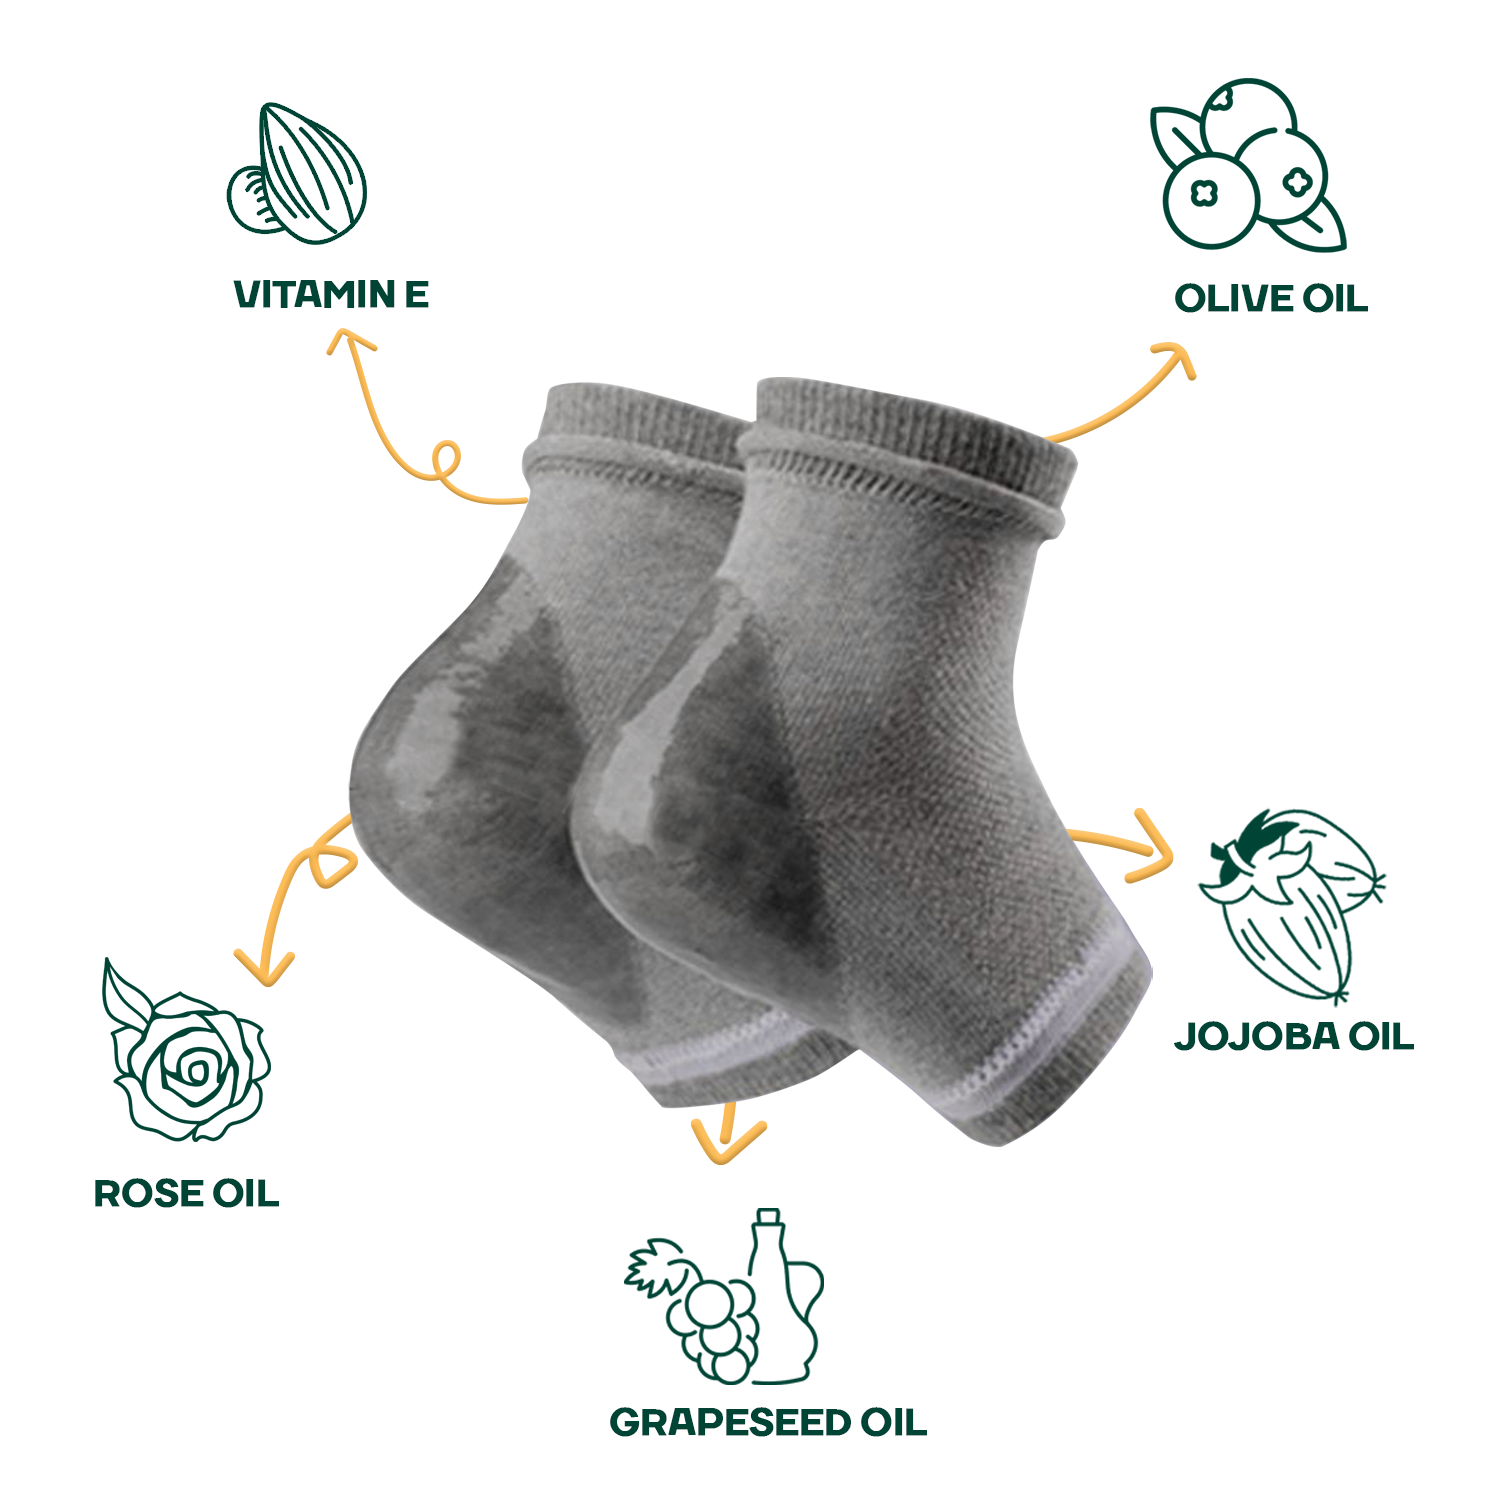 Mountainor Silicone Gel Heel Socks for Dry Hard Cracked Heel Repair Pad (Free Size) Pack of 3 - Mountainor